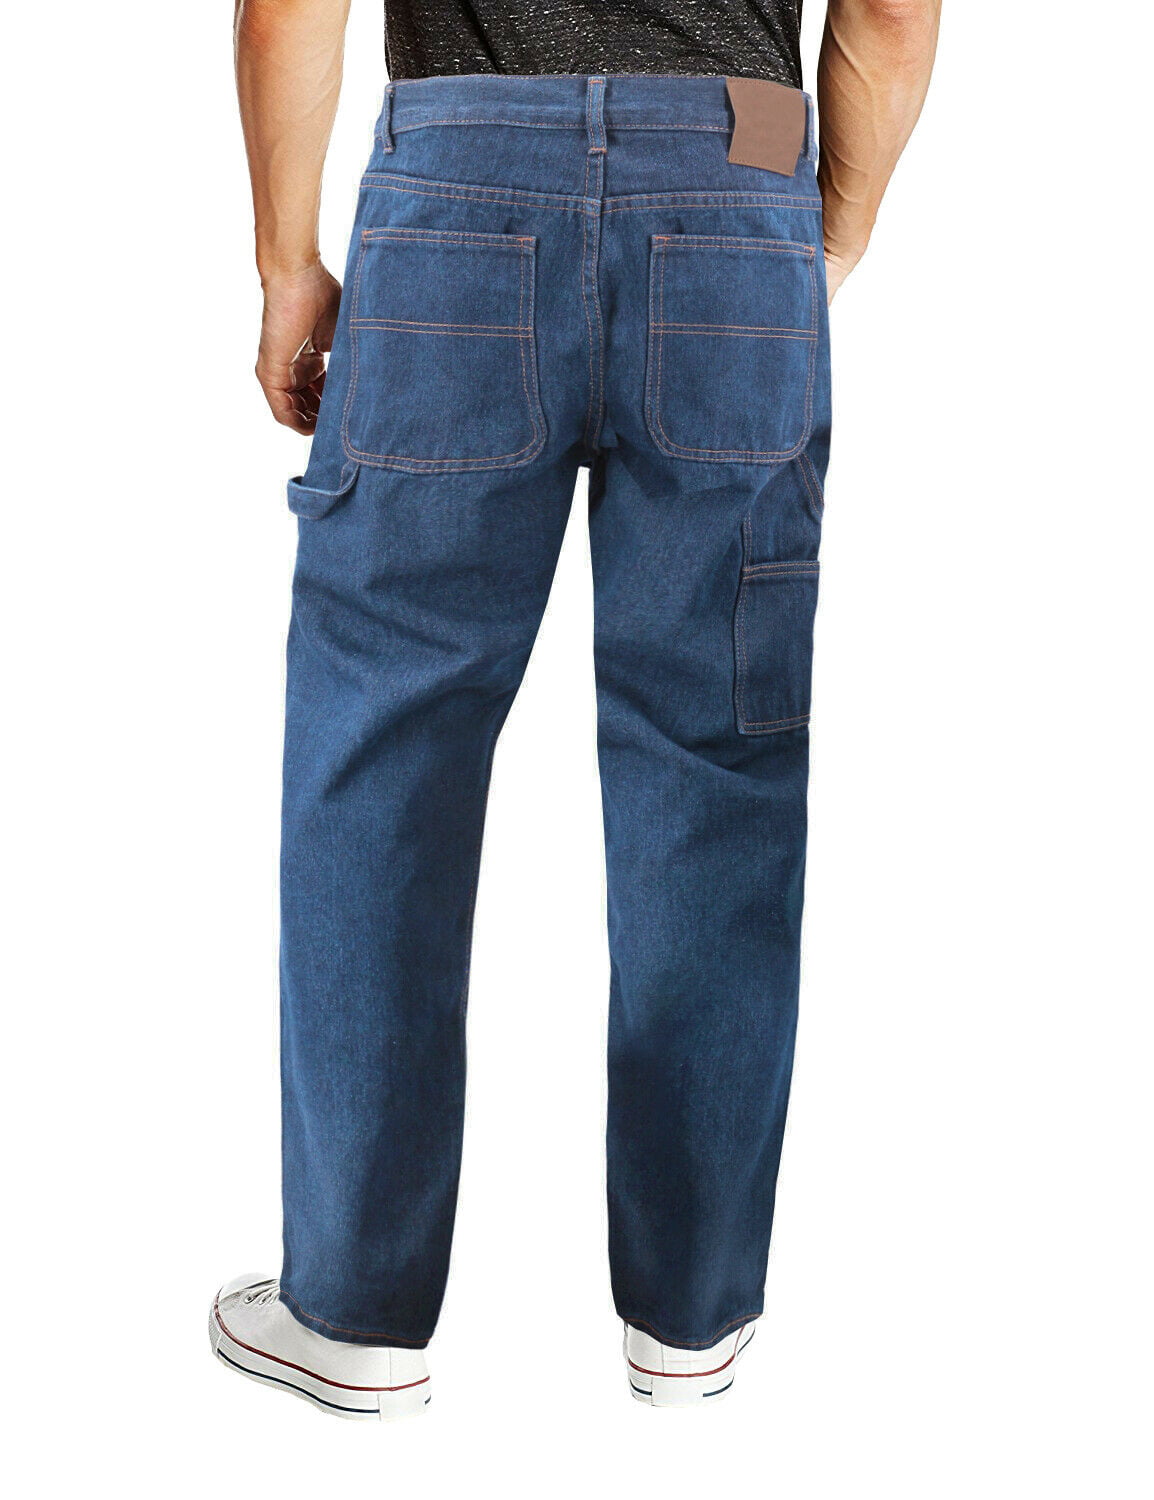 ammunition Frivillig Kærlig Men's Carpenter Work Jeans Hammer Loop Relaxed Fit Casual Cotton Denim Pants  (Blue, 30x30) - Walmart.com